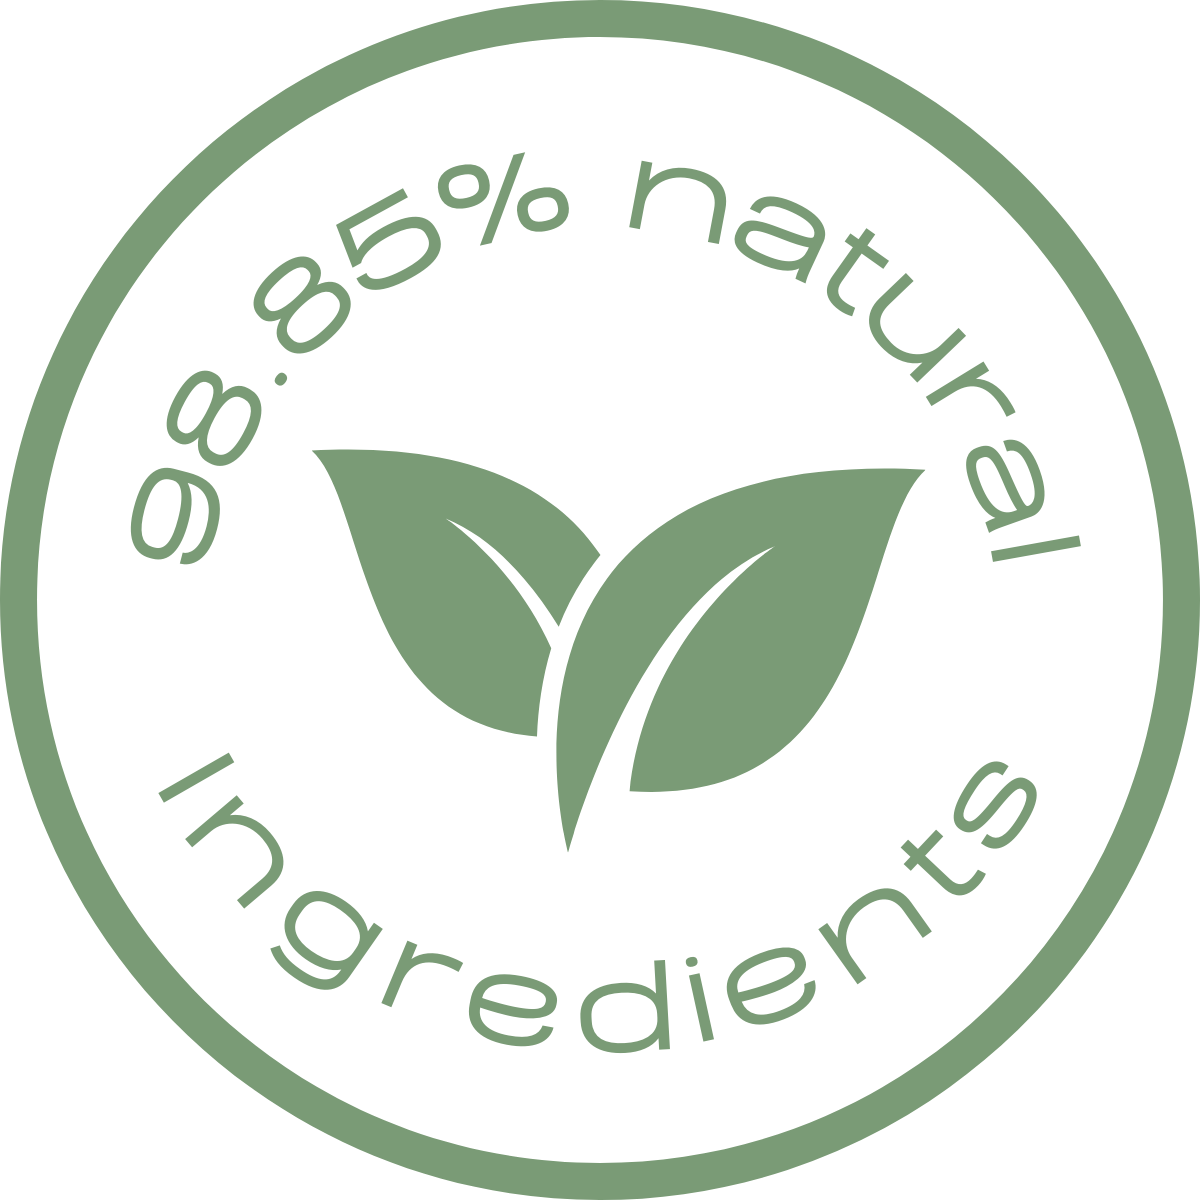 98.85% natural ingredients